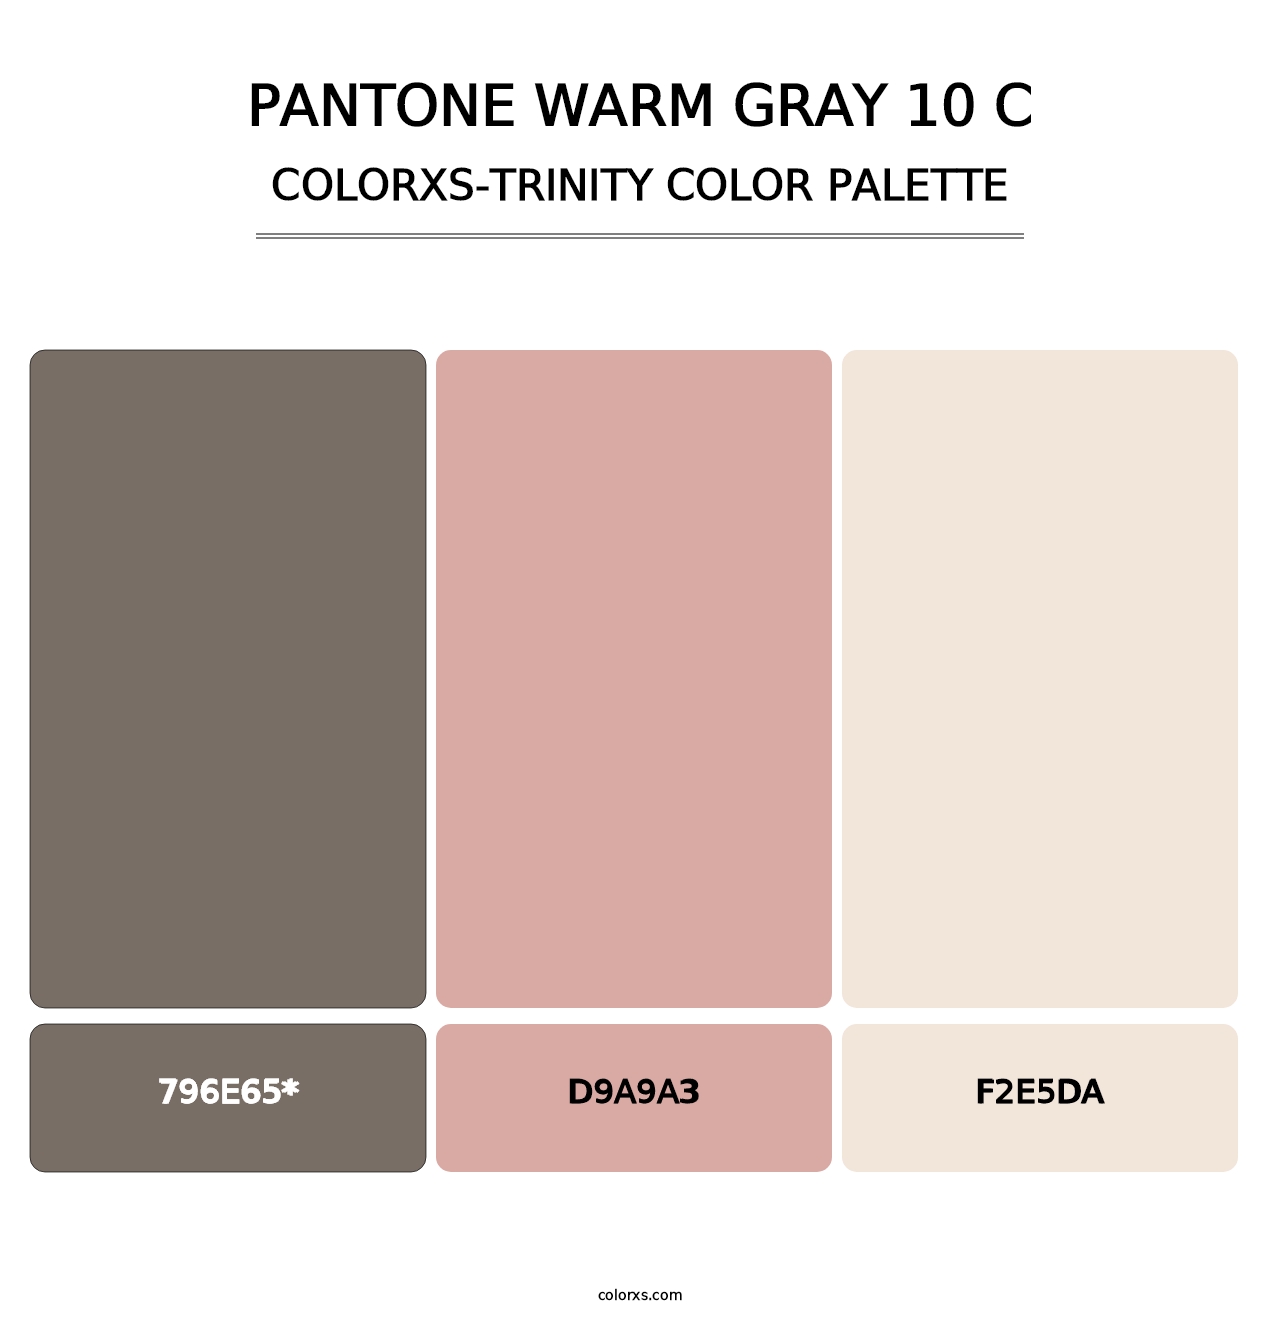 PANTONE Warm Gray 10 C - Colorxs Trinity Palette